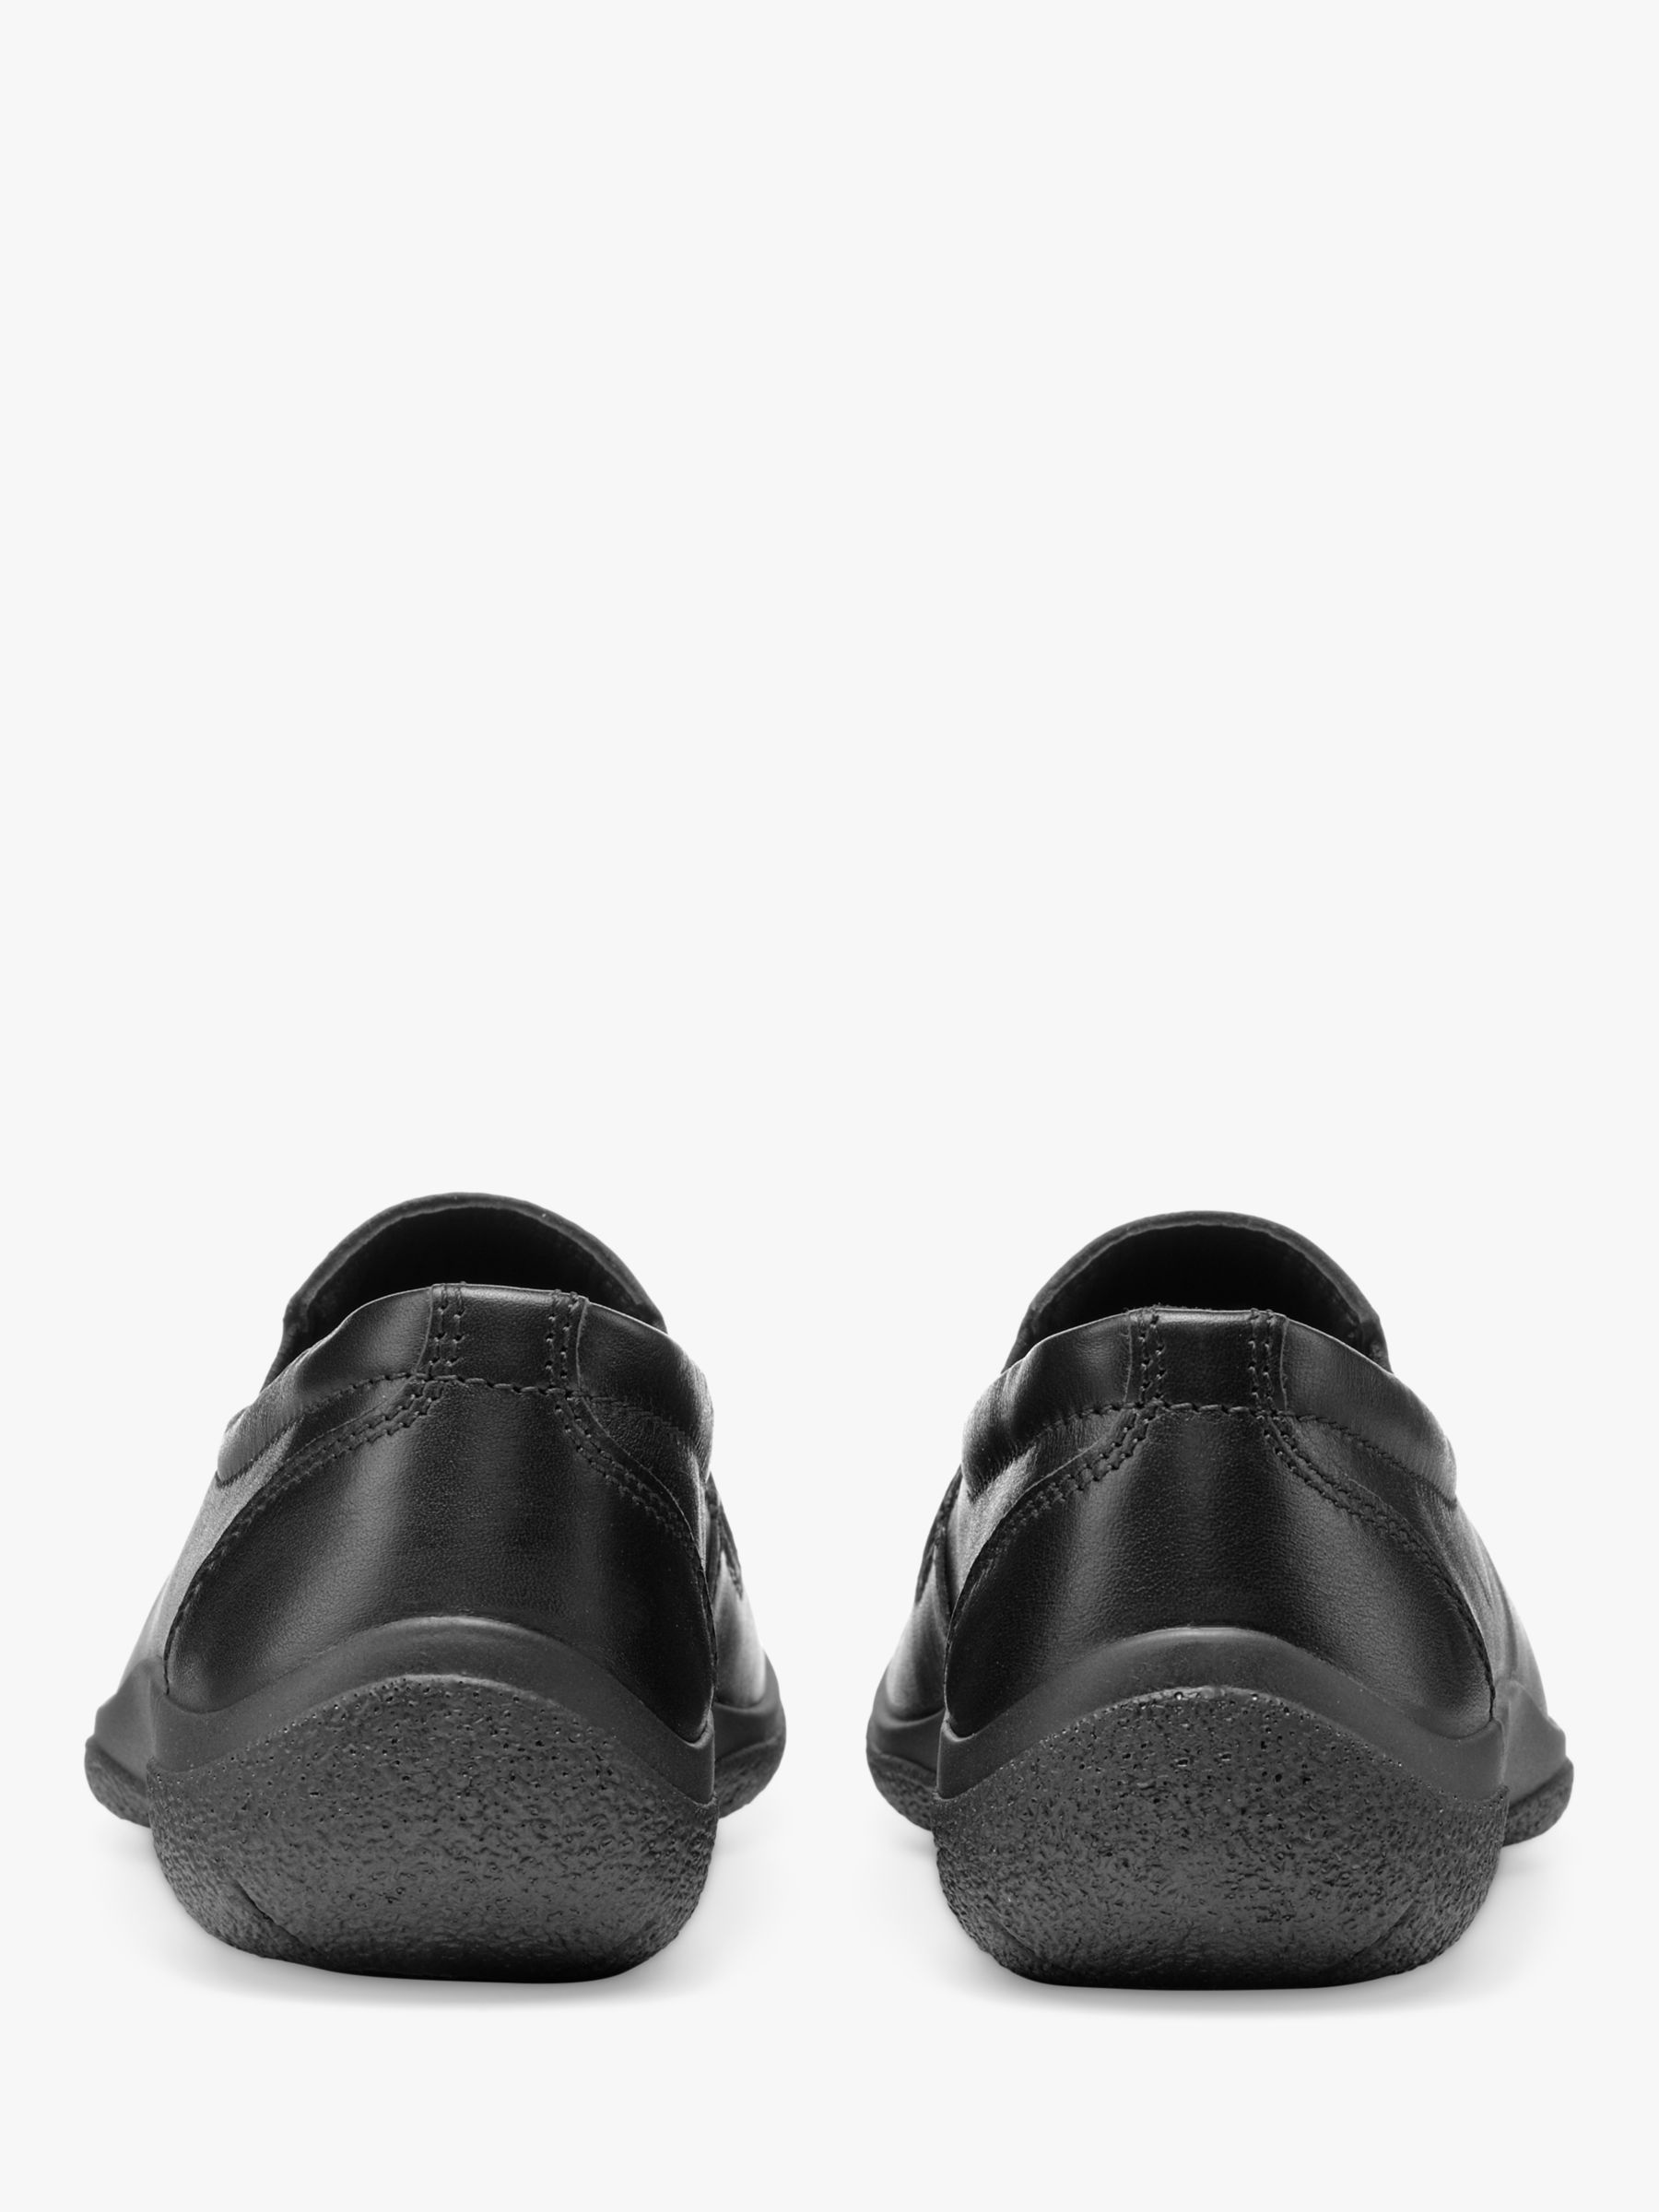 Buy Hotter Glove II Leather Slip-On Shoes, Black Online at johnlewis.com